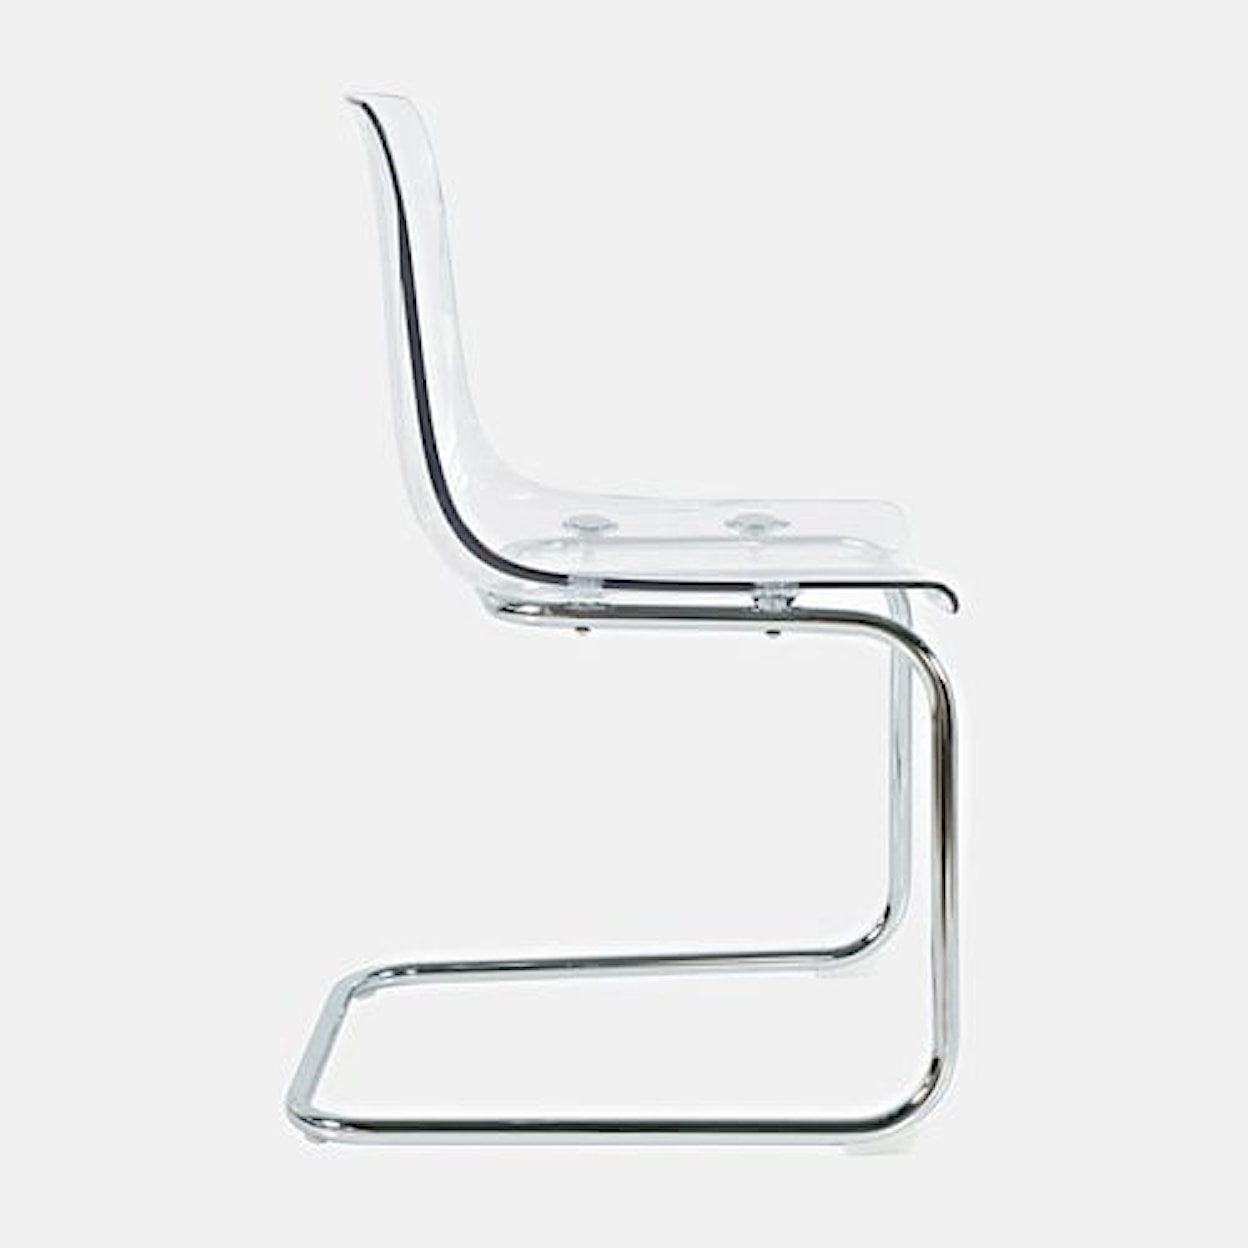 Jofran Clarity Dining Chair (2/CTN)